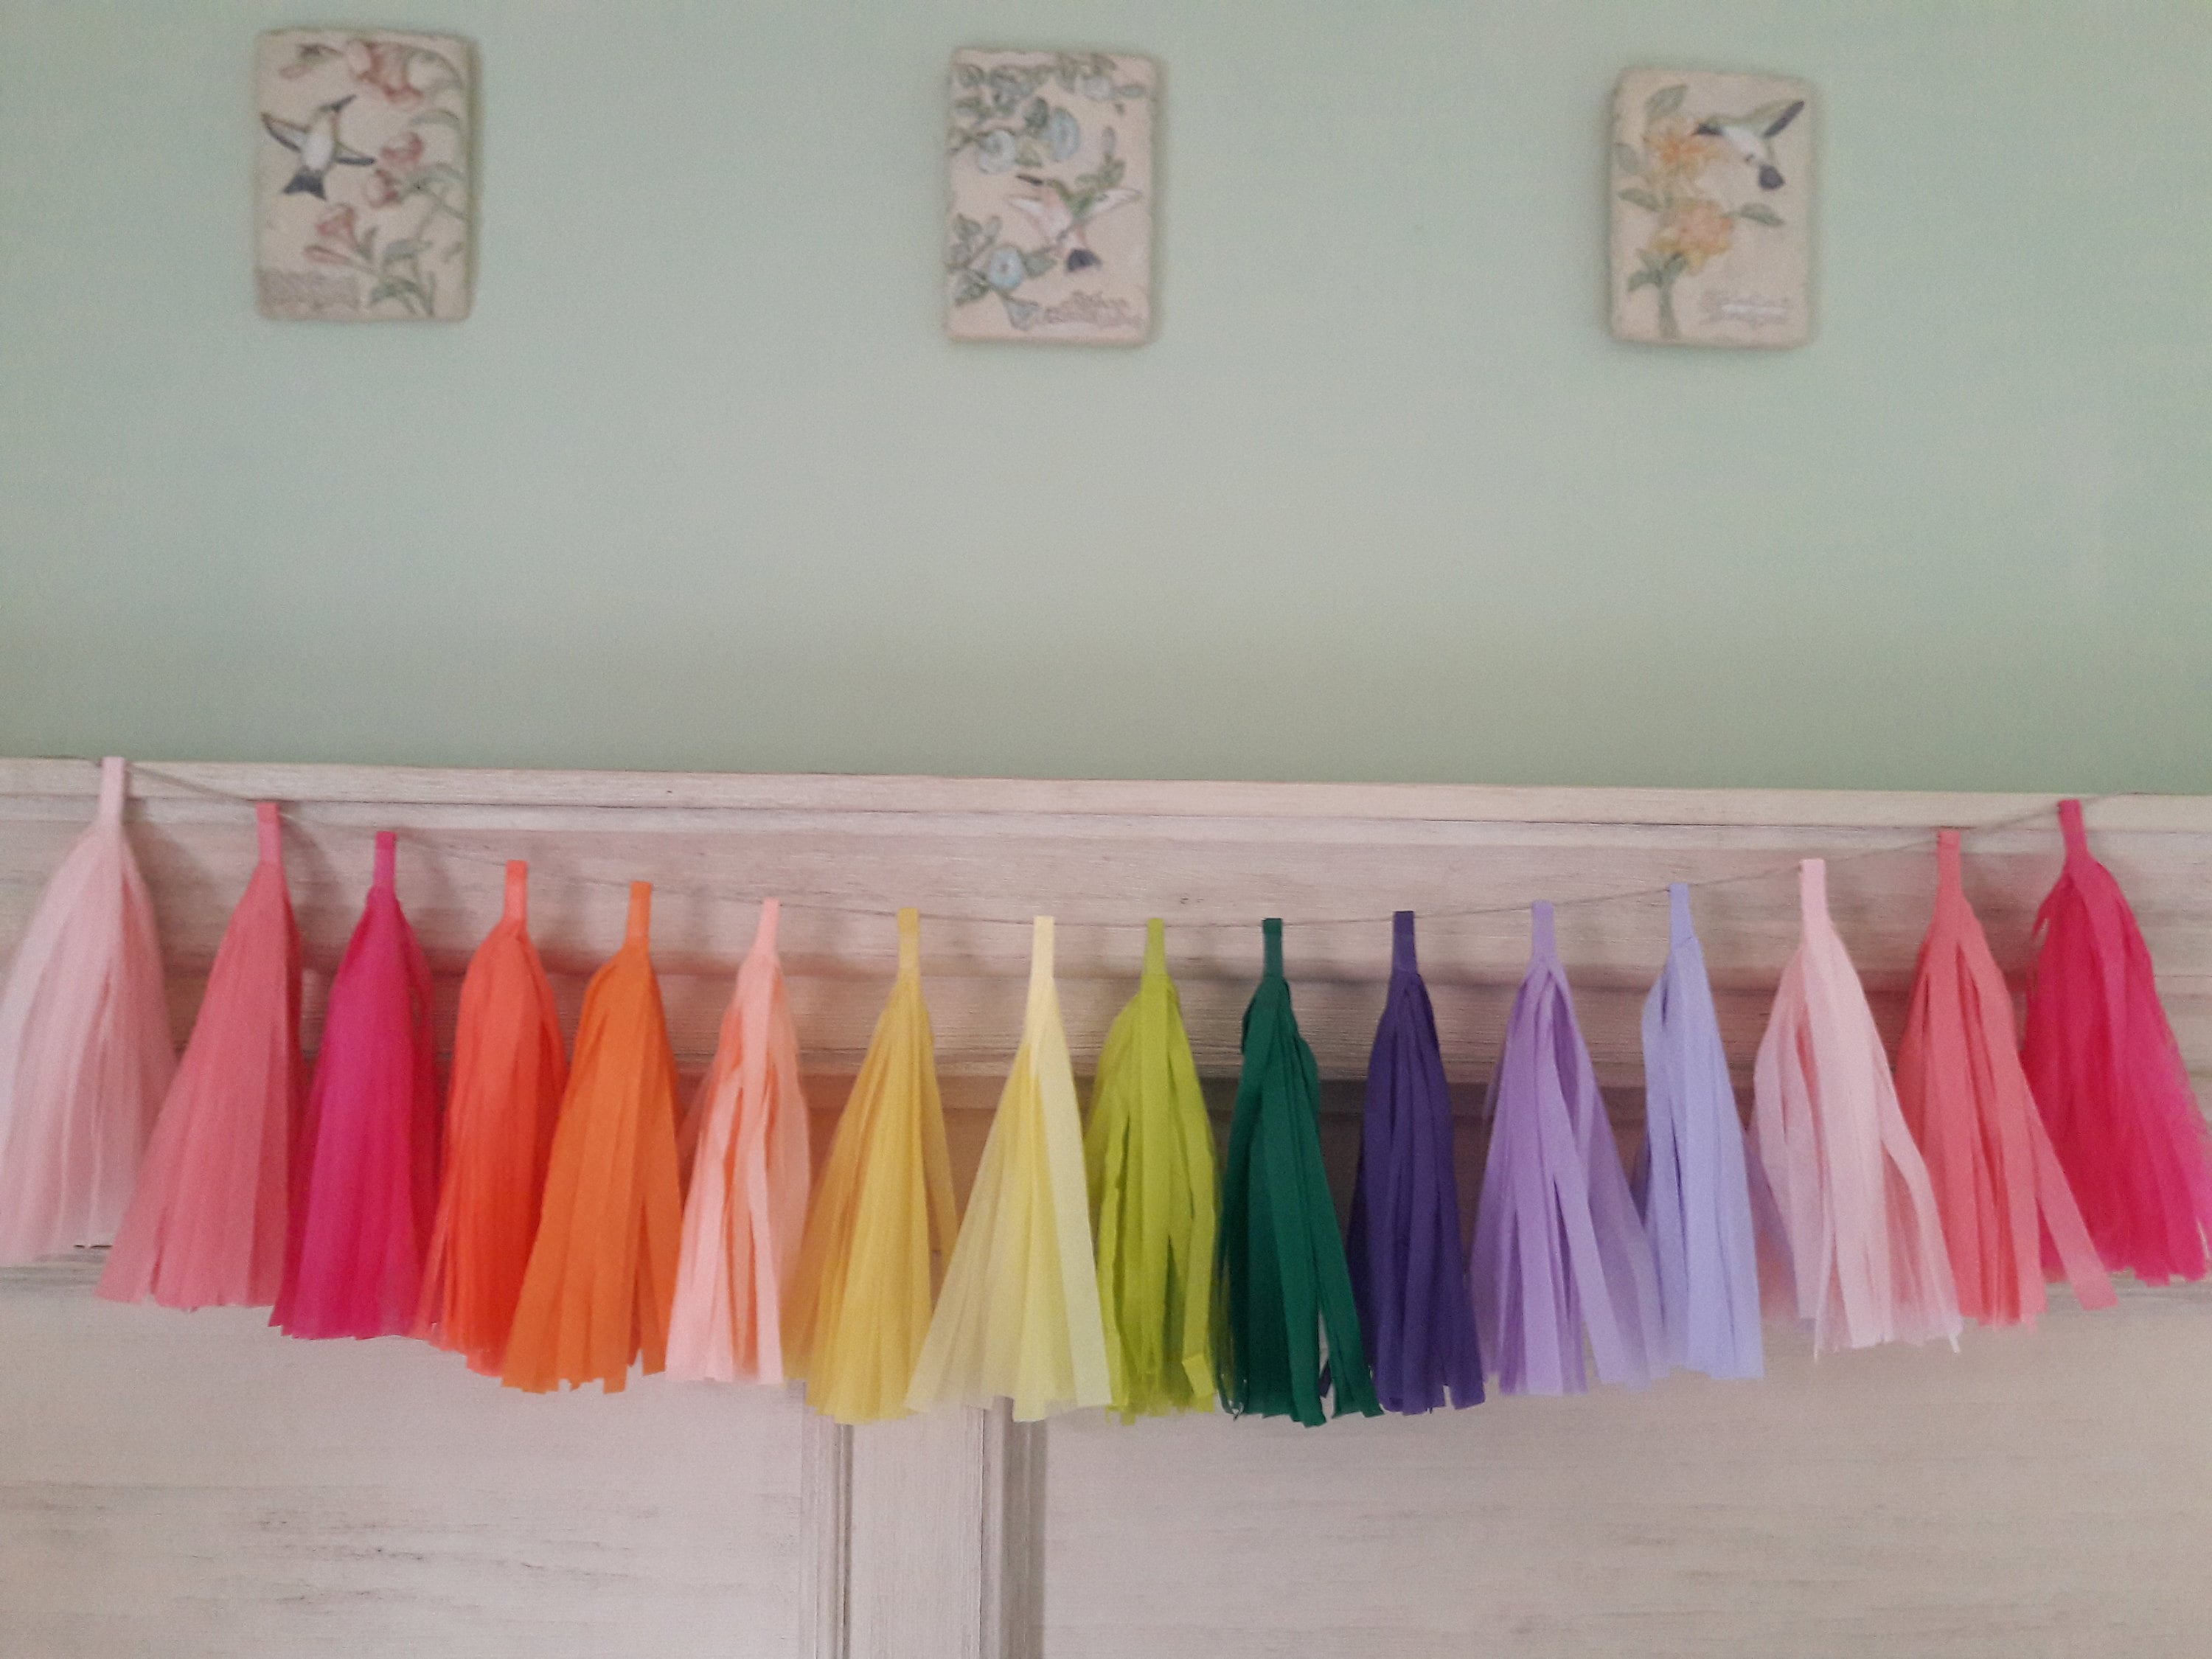 Pastel Rainbow Party-Decorations Supplies Streamers-Garland - 29pcs Baby Shower Birthday Wedding Tissue Pom Poms,Tassel Banner Backdrop Decor